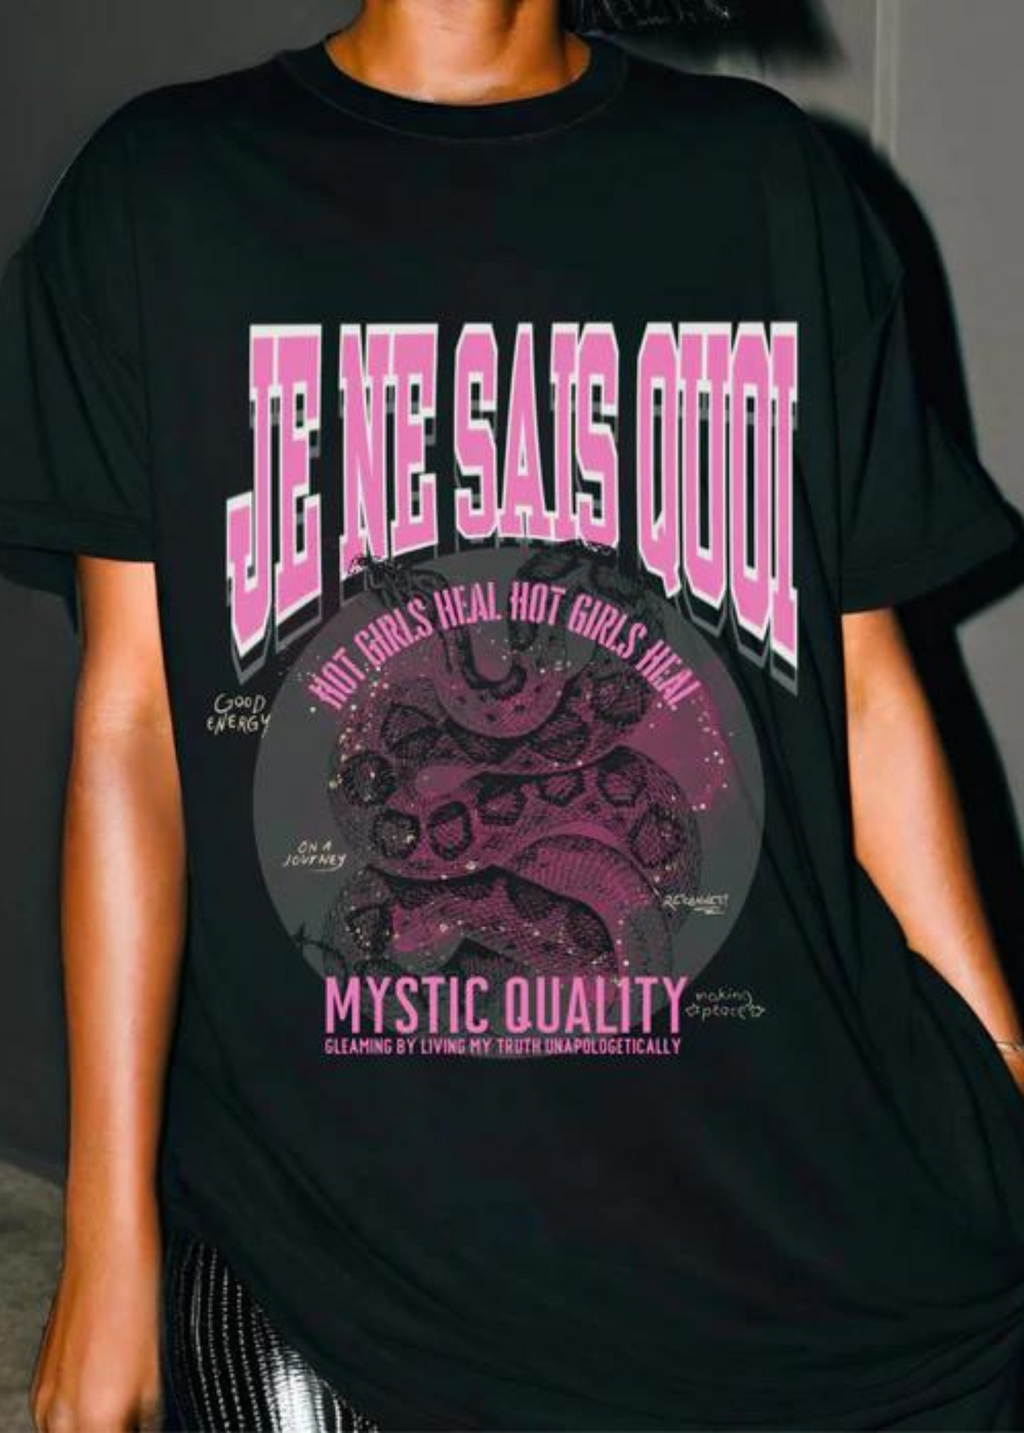 The Mystic T-shirt